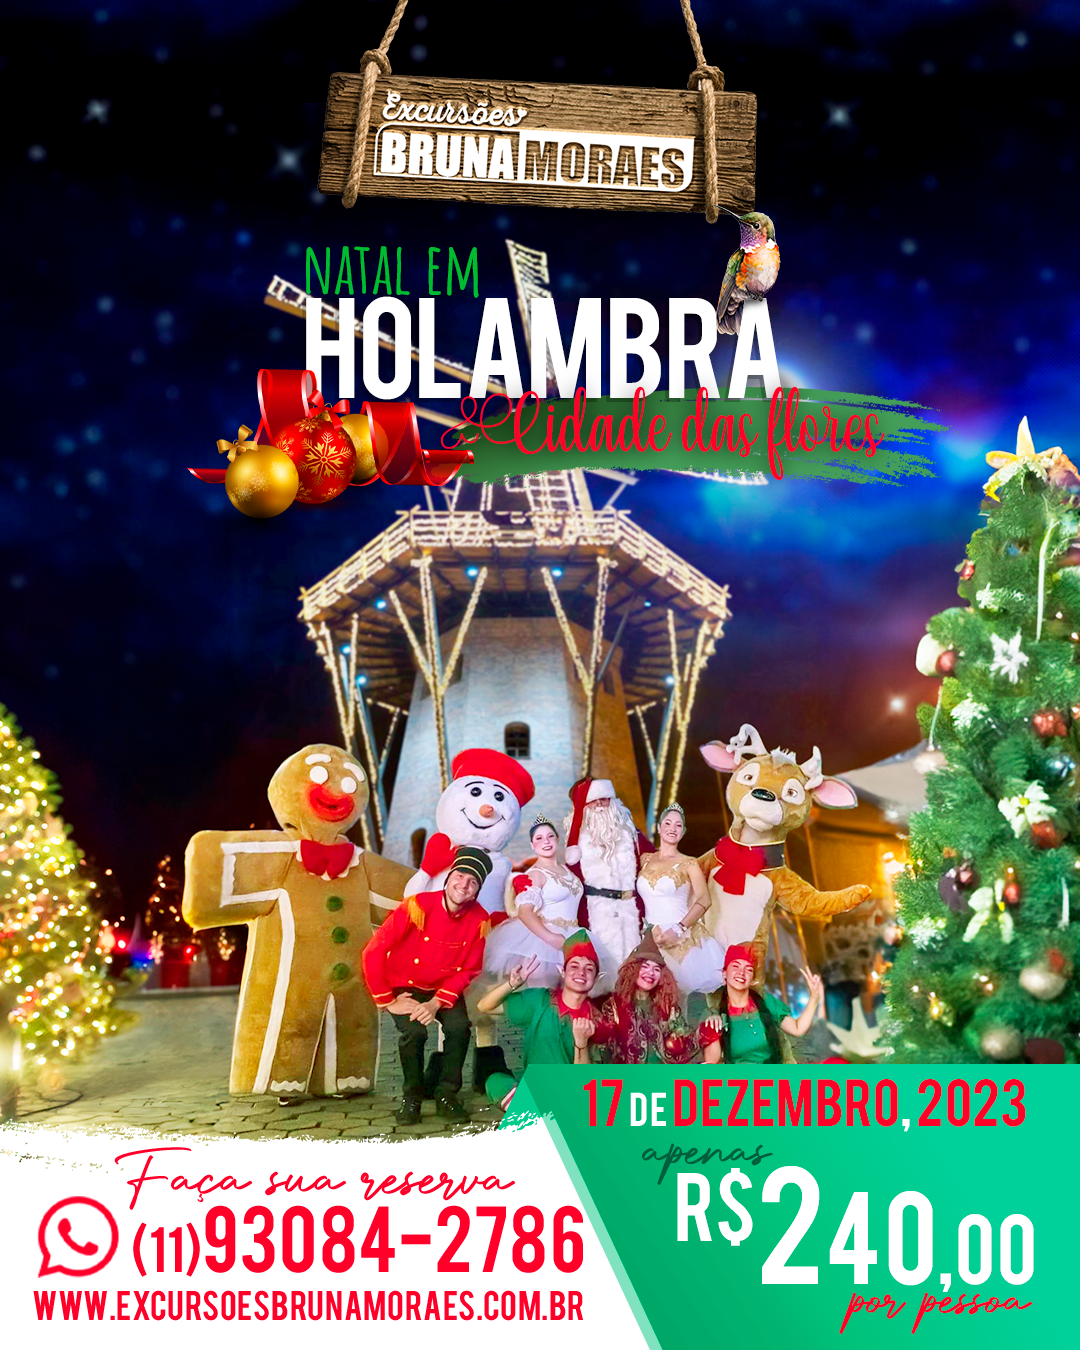 Natal de Holambra - by Expoflora